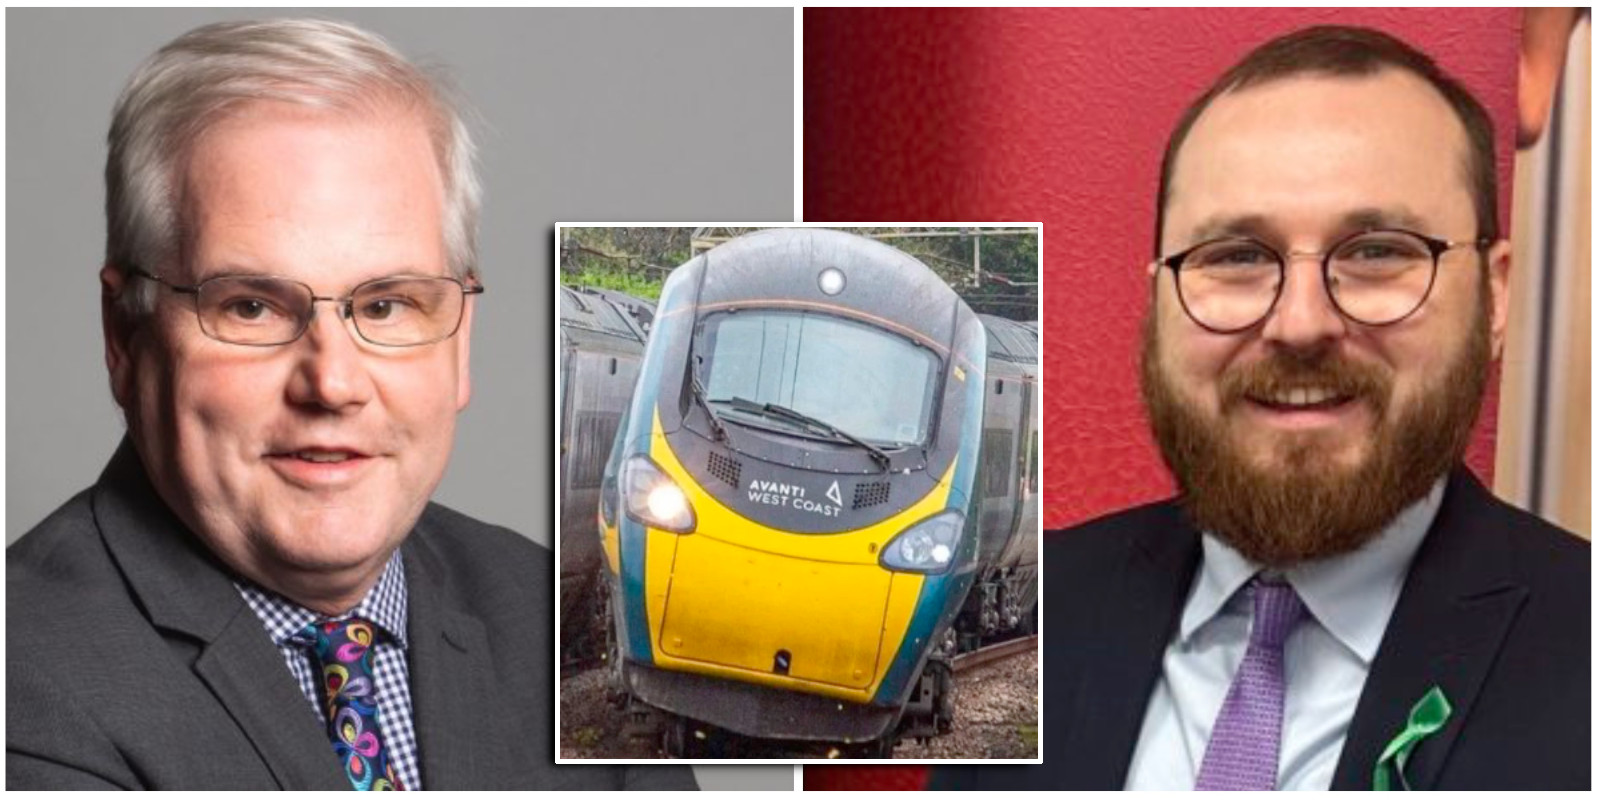 North Wales politicians slam Avanti Trains for poor service